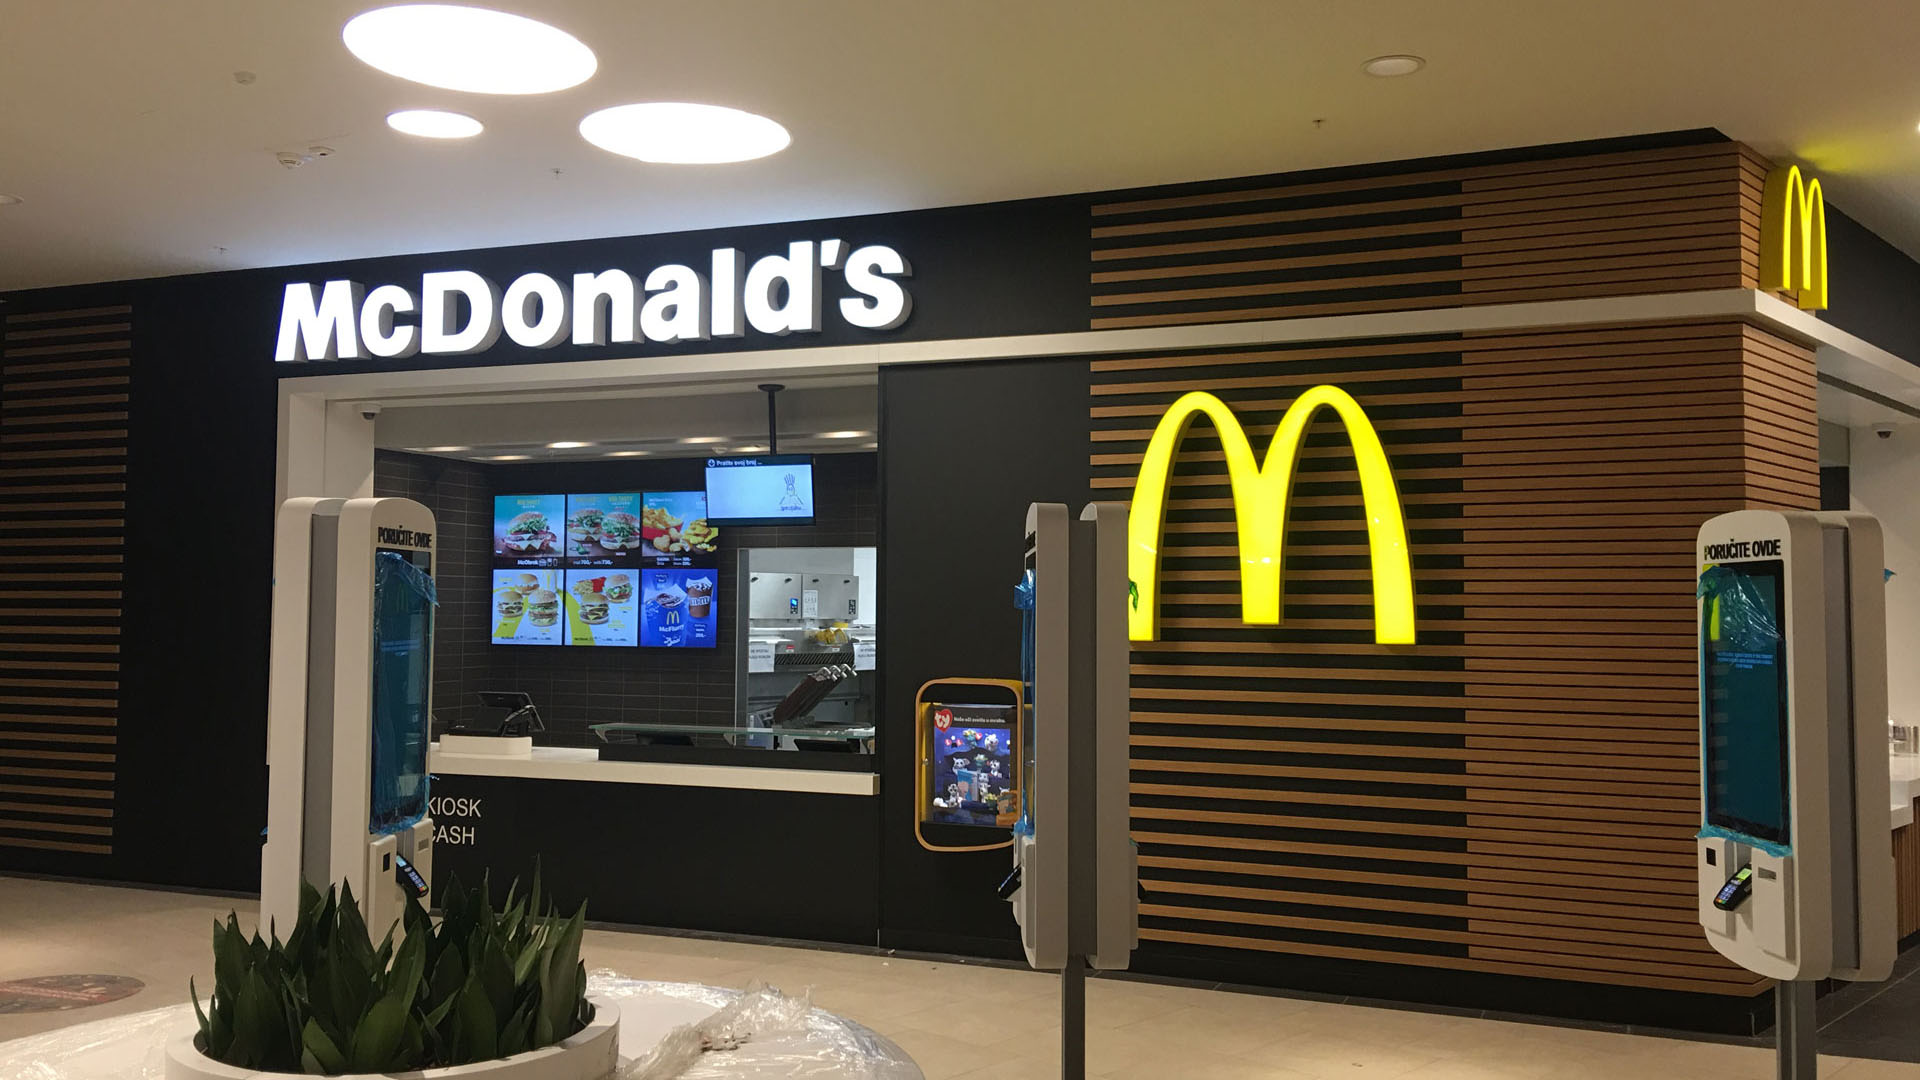 McDonalds, Beo Shopping Center, Belgrade